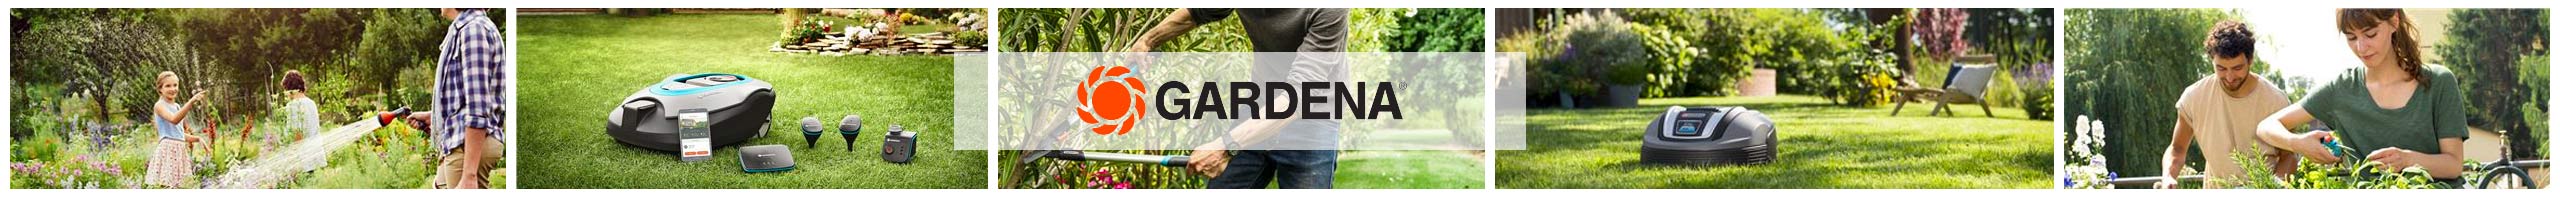 Test et avis outil Gardena jardin pas cher